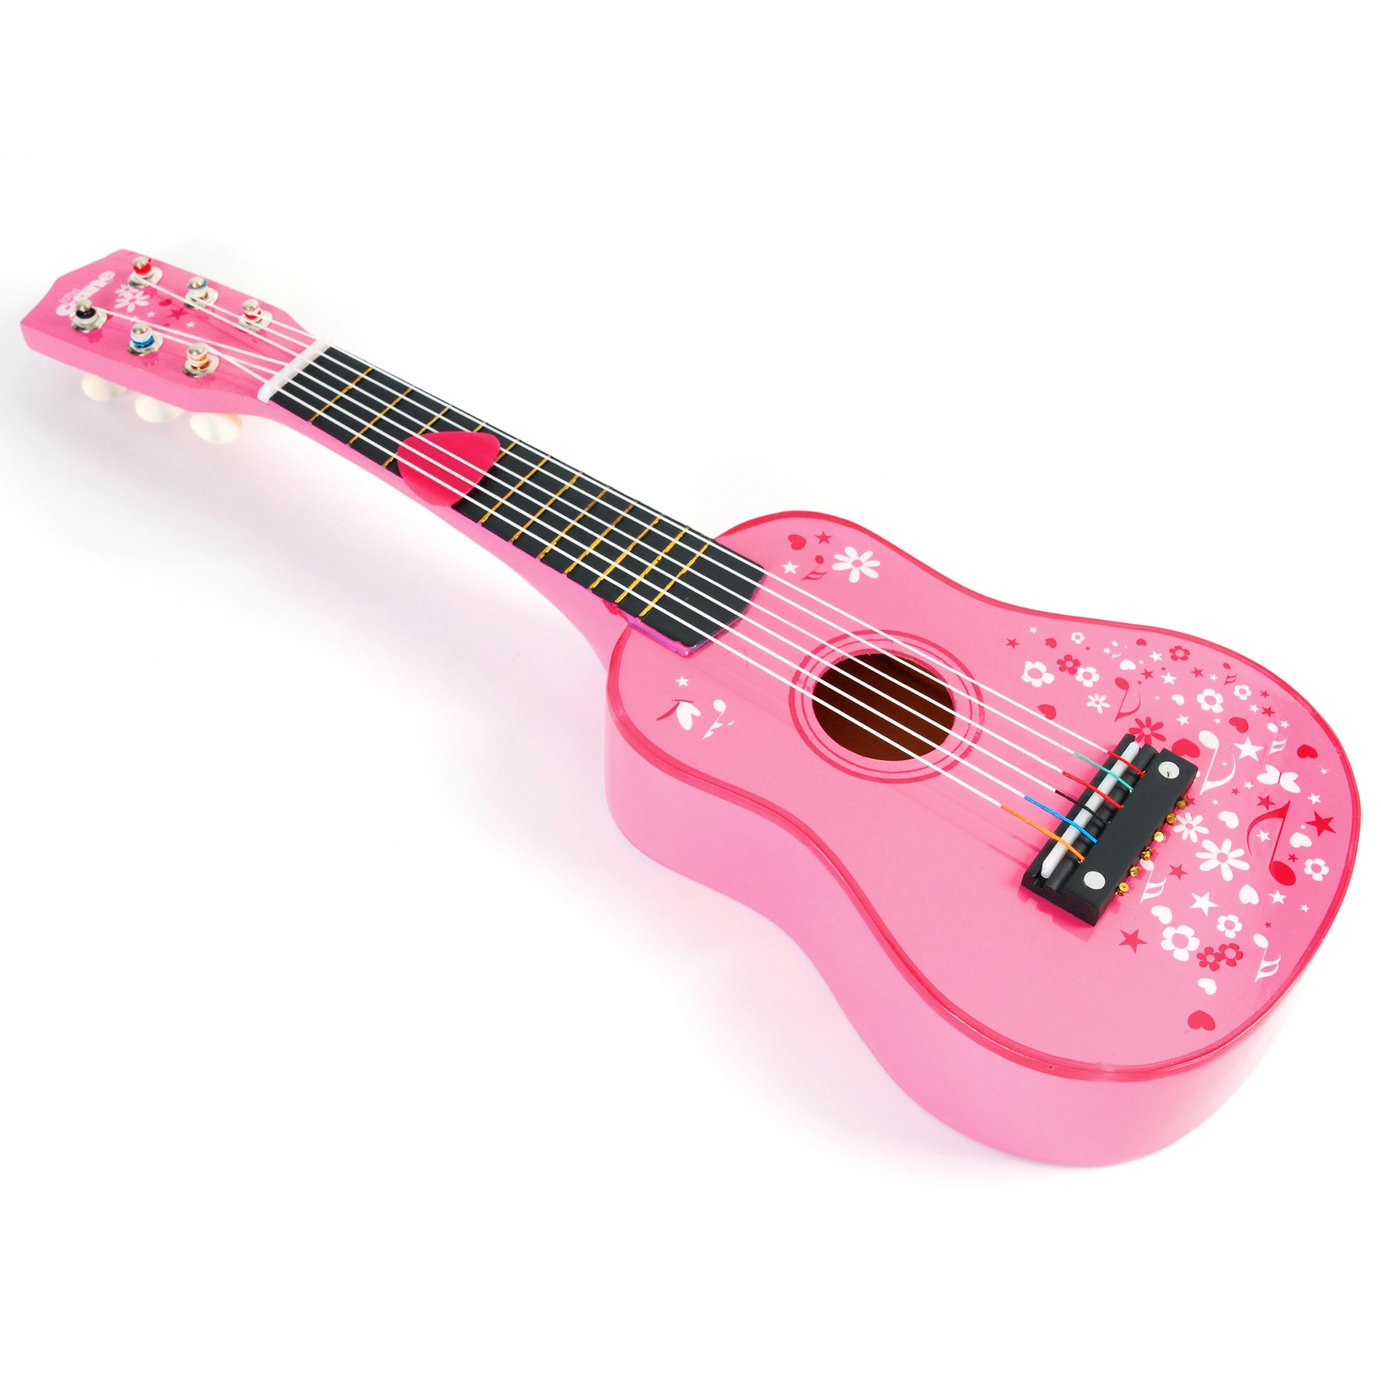 Tildo Pink Wooden Guitar | Musical toys 